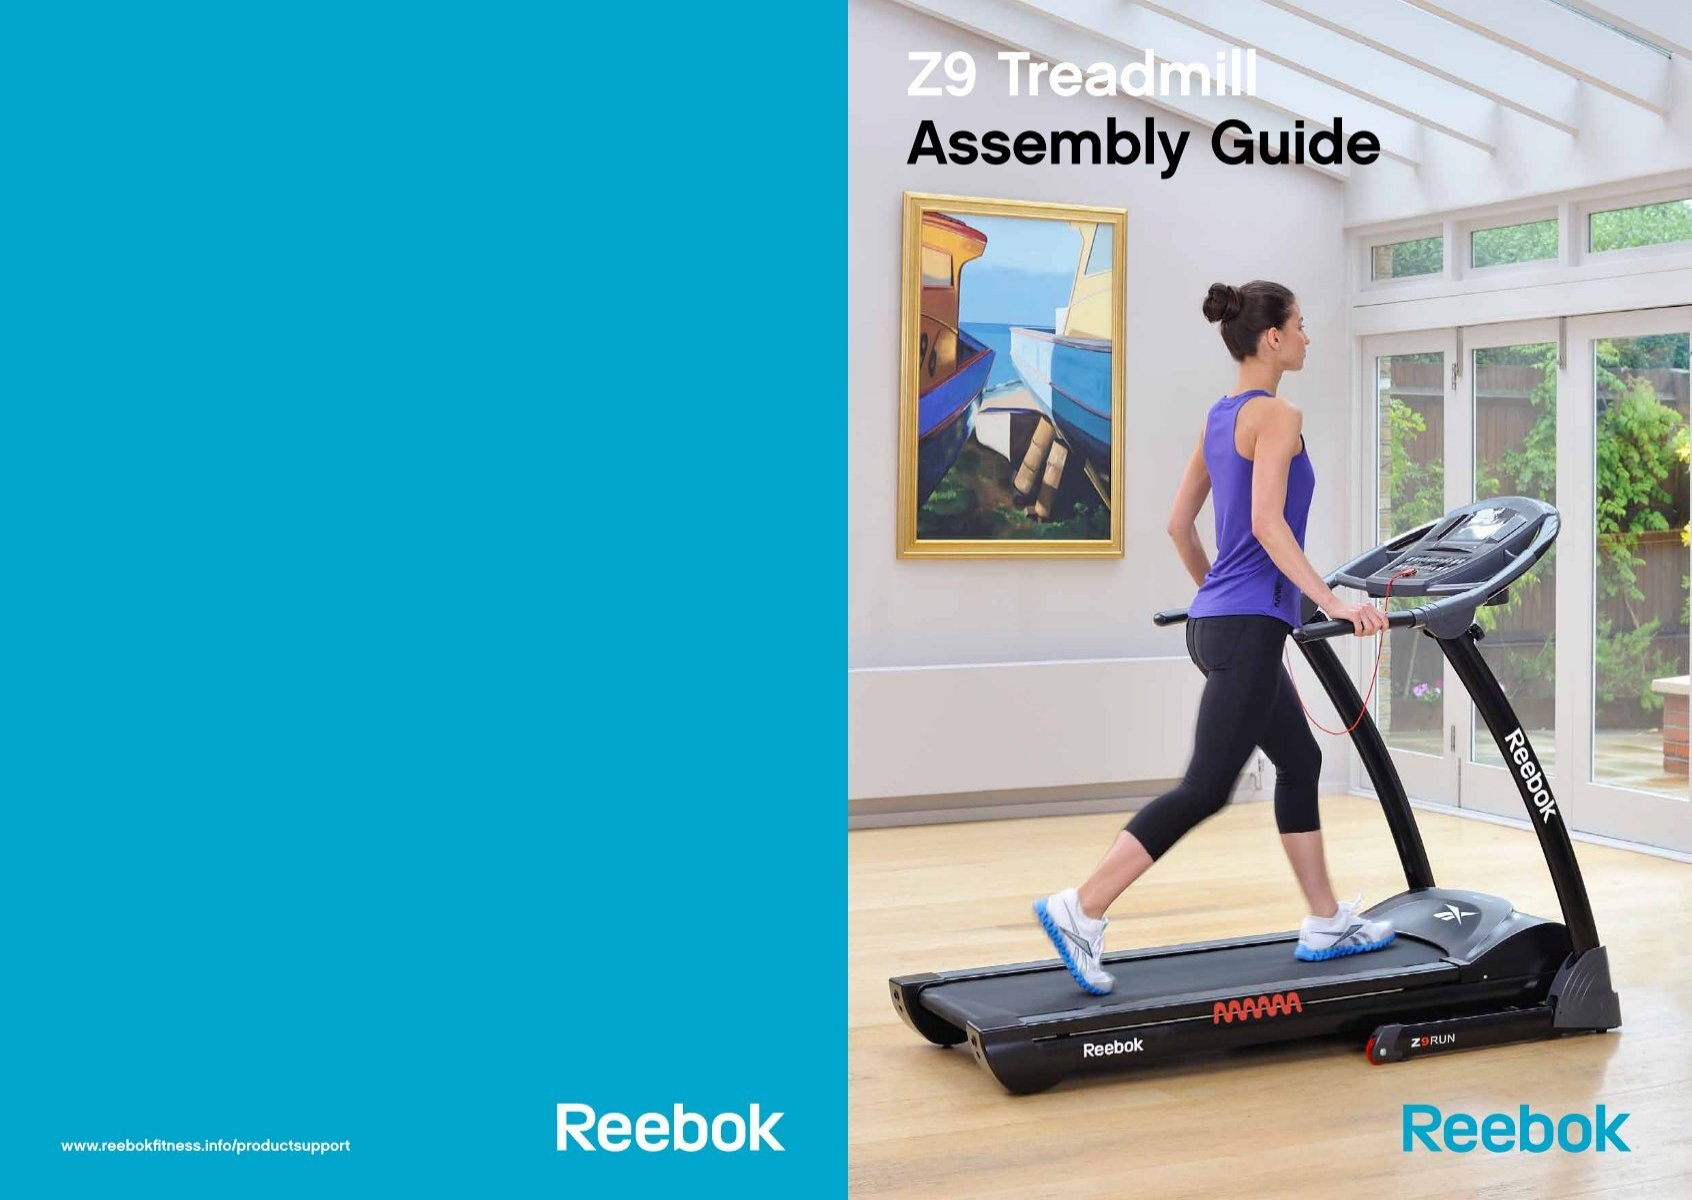 Z9 Treadmill Assembly Guide - Reebok 